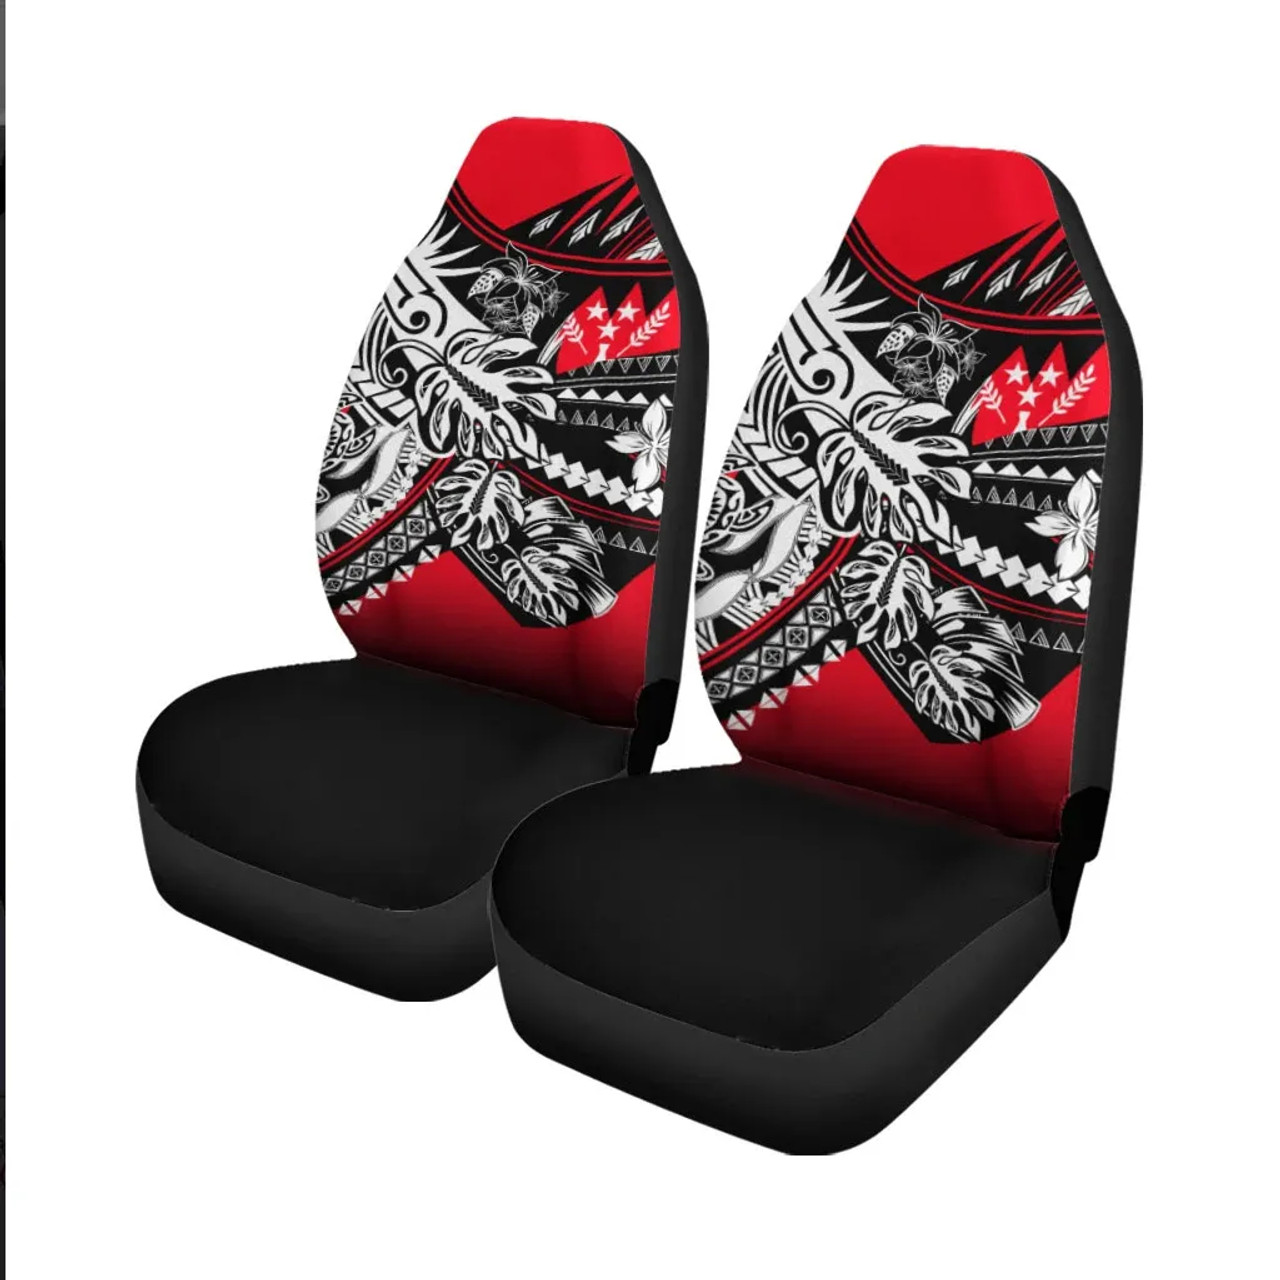 Kosrae State Car Seat Cover - Tribal Jungle Pattern